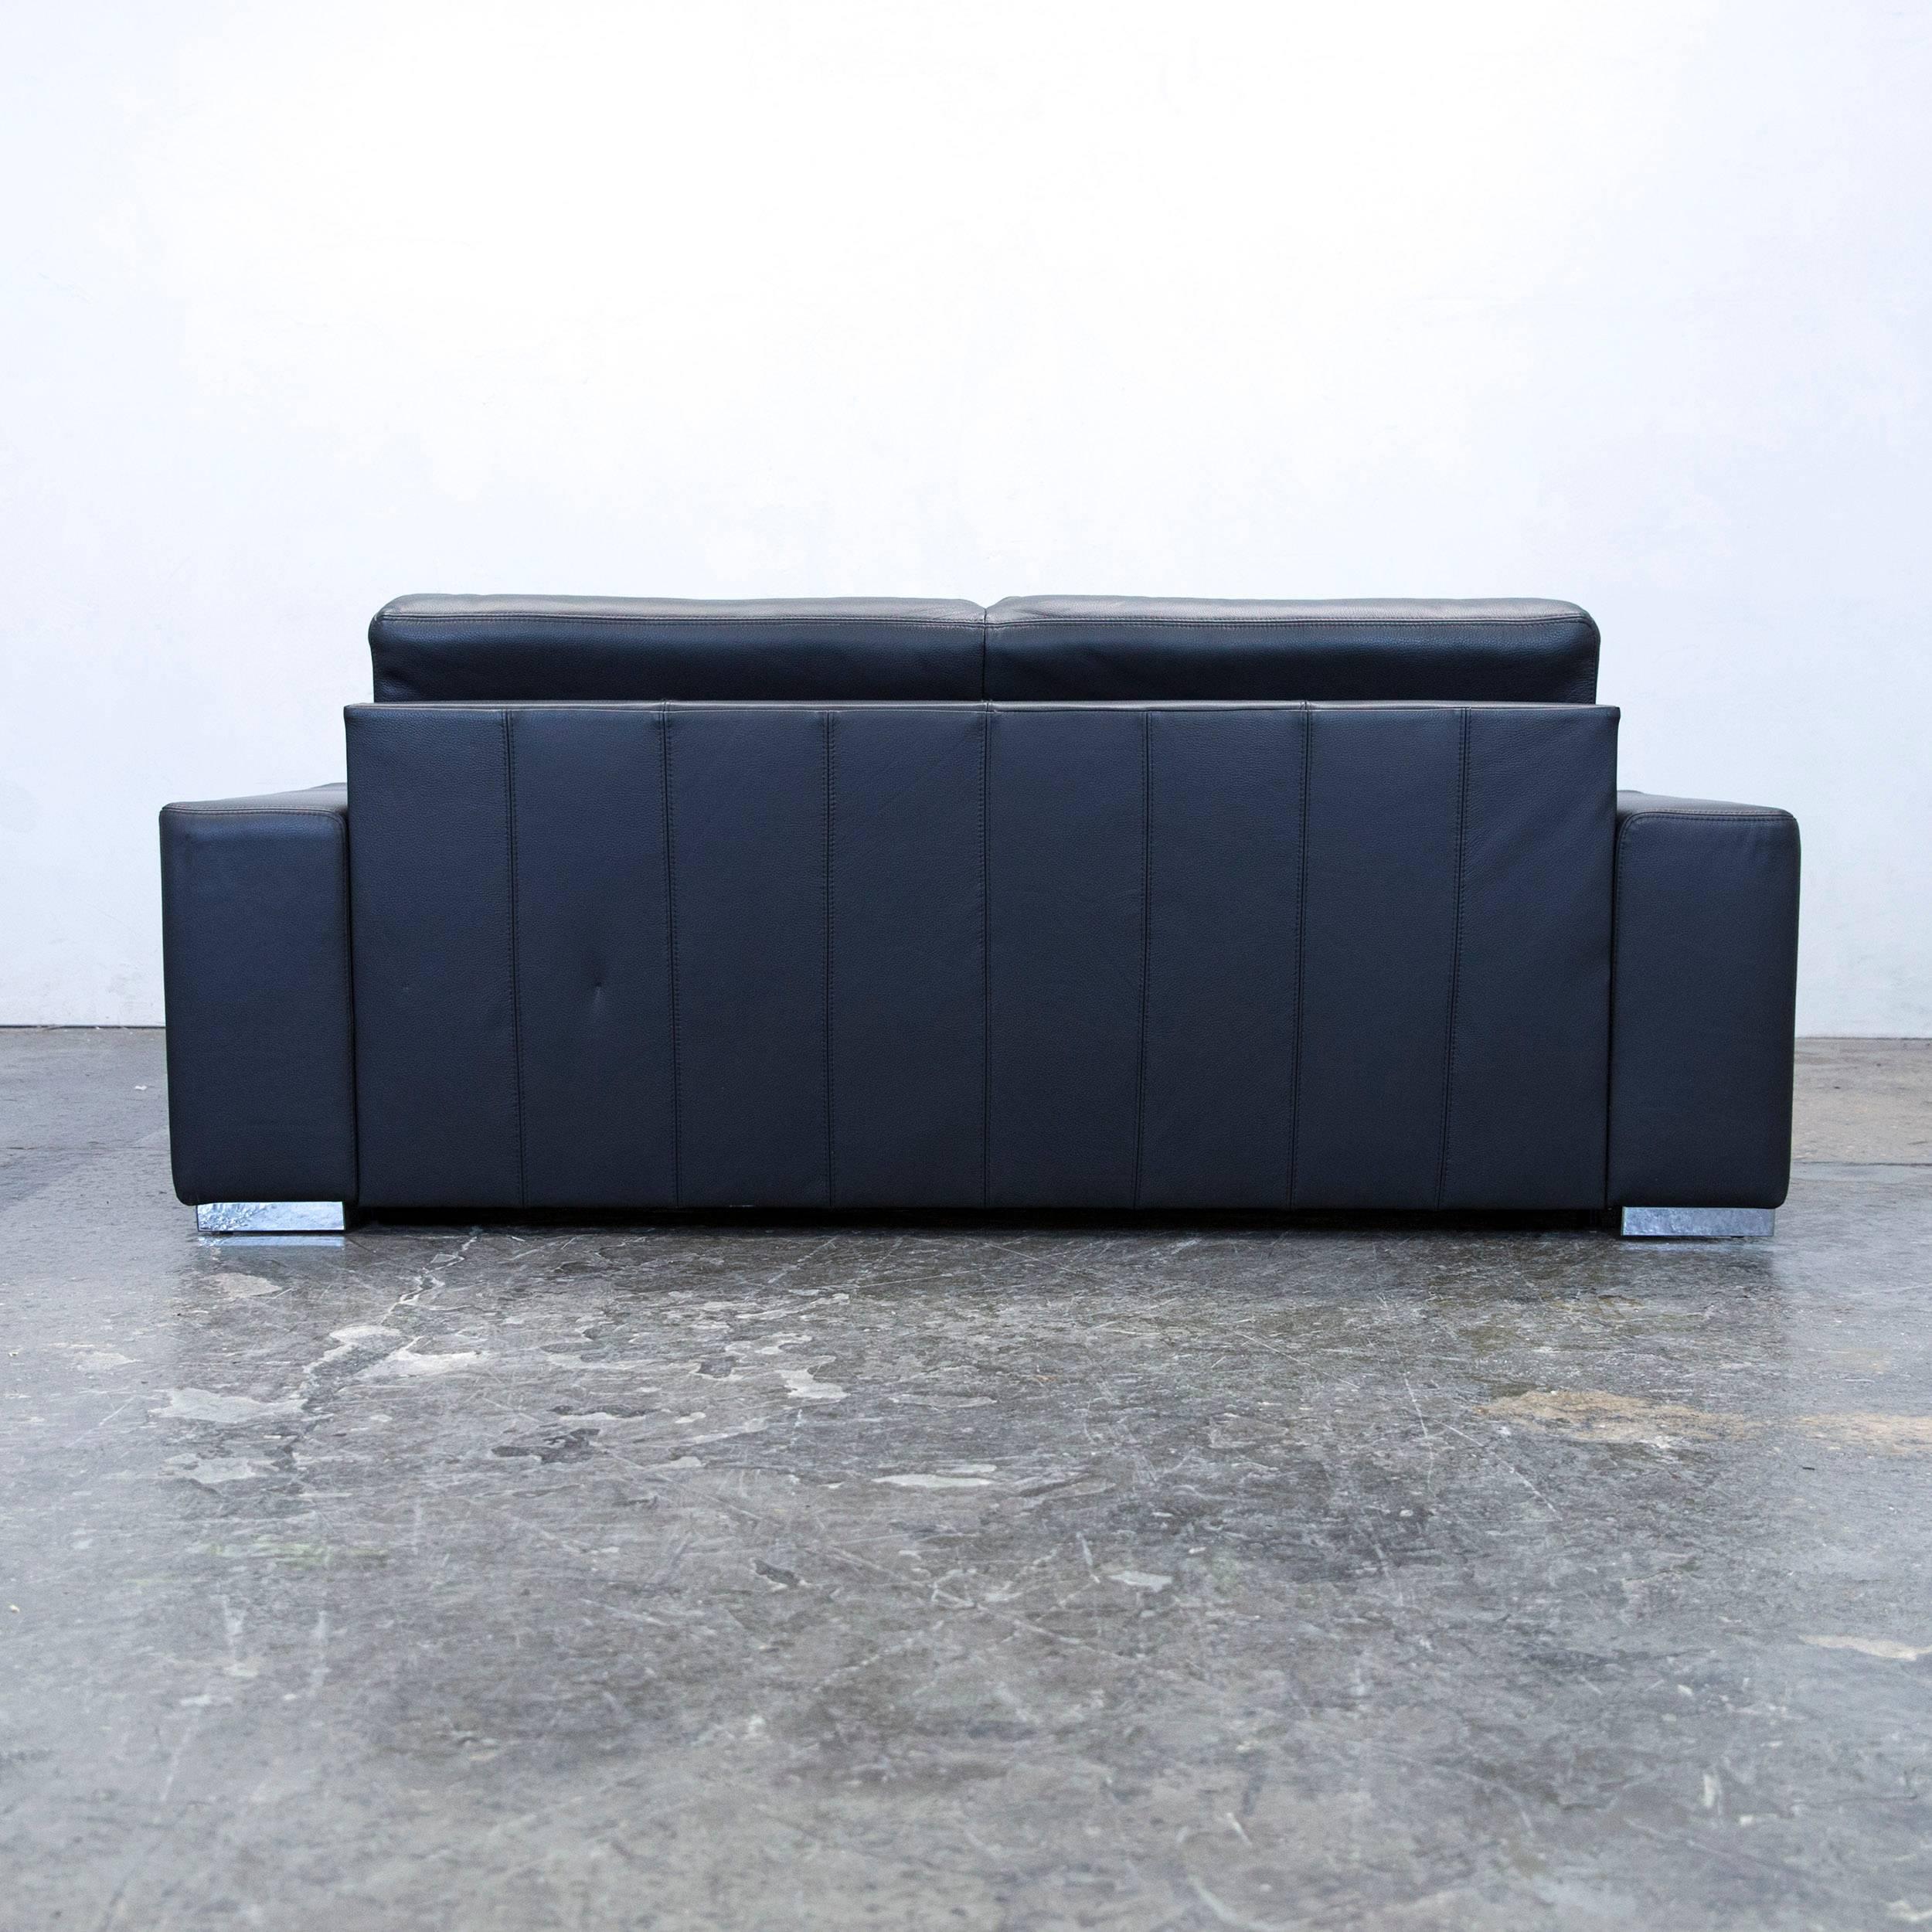 Designer Sleepsofa Set Leather Black Function Couch Topper Modern Footstool 3